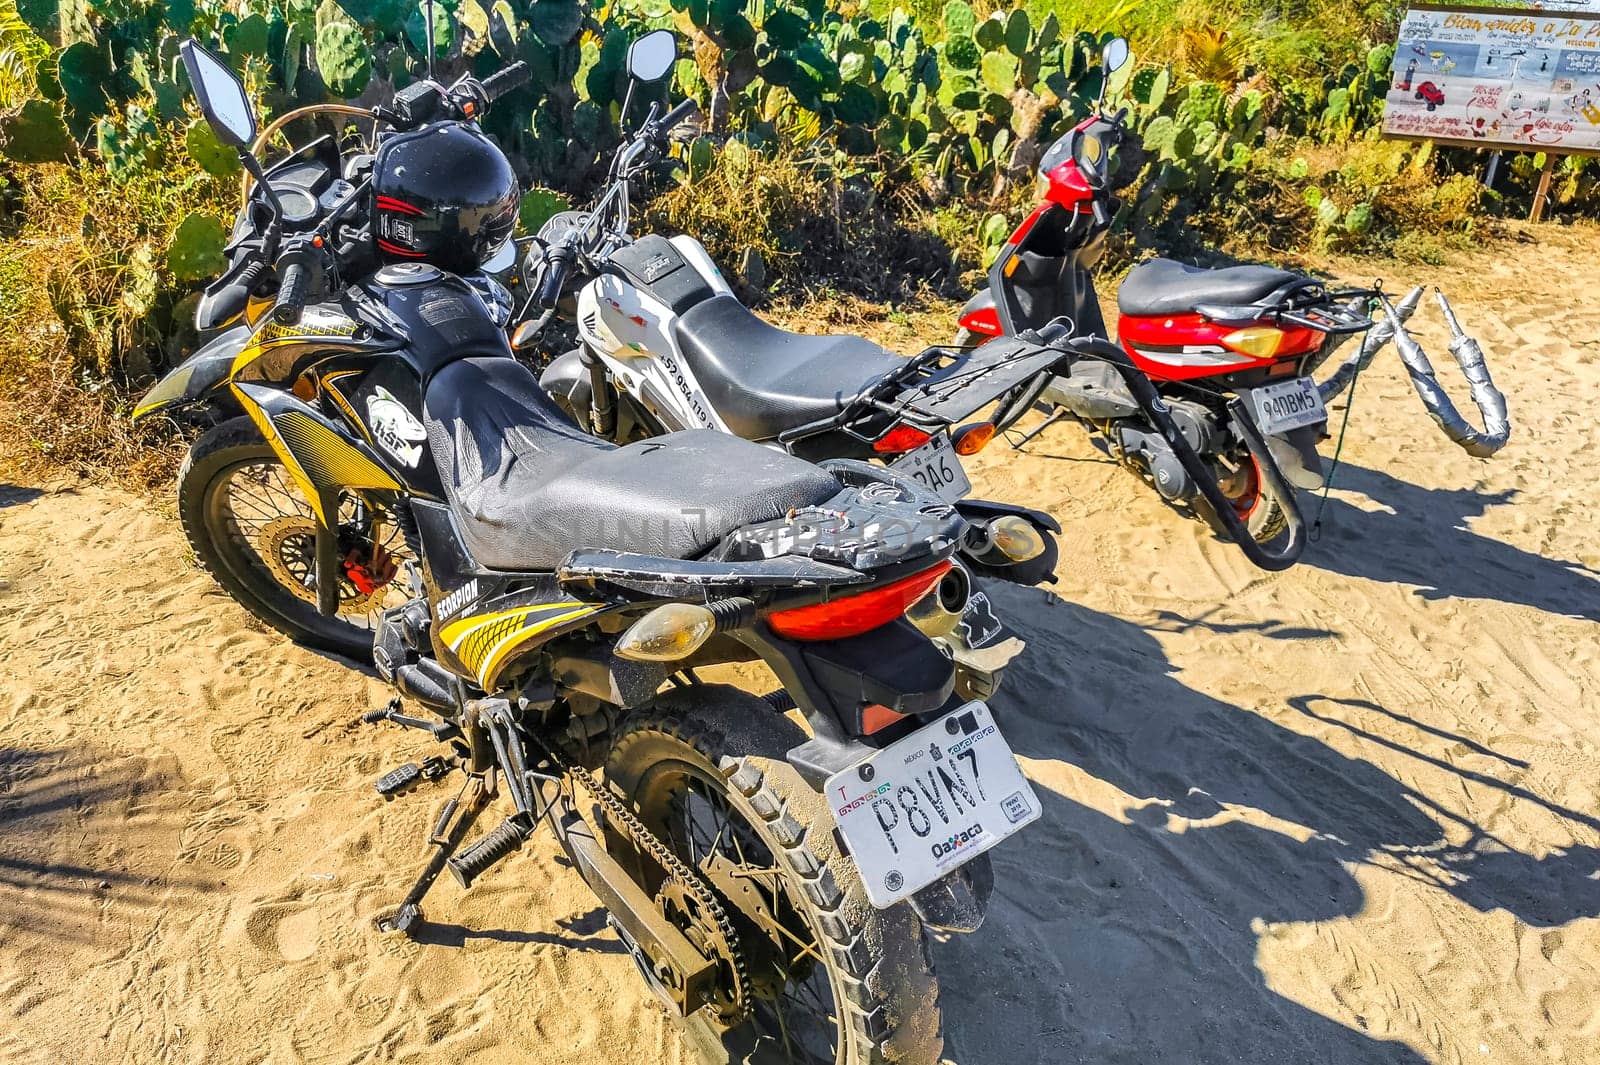 Scooters Motorcycles Motorbikes Outdoor in Puerto Escondido Mexico. by Arkadij